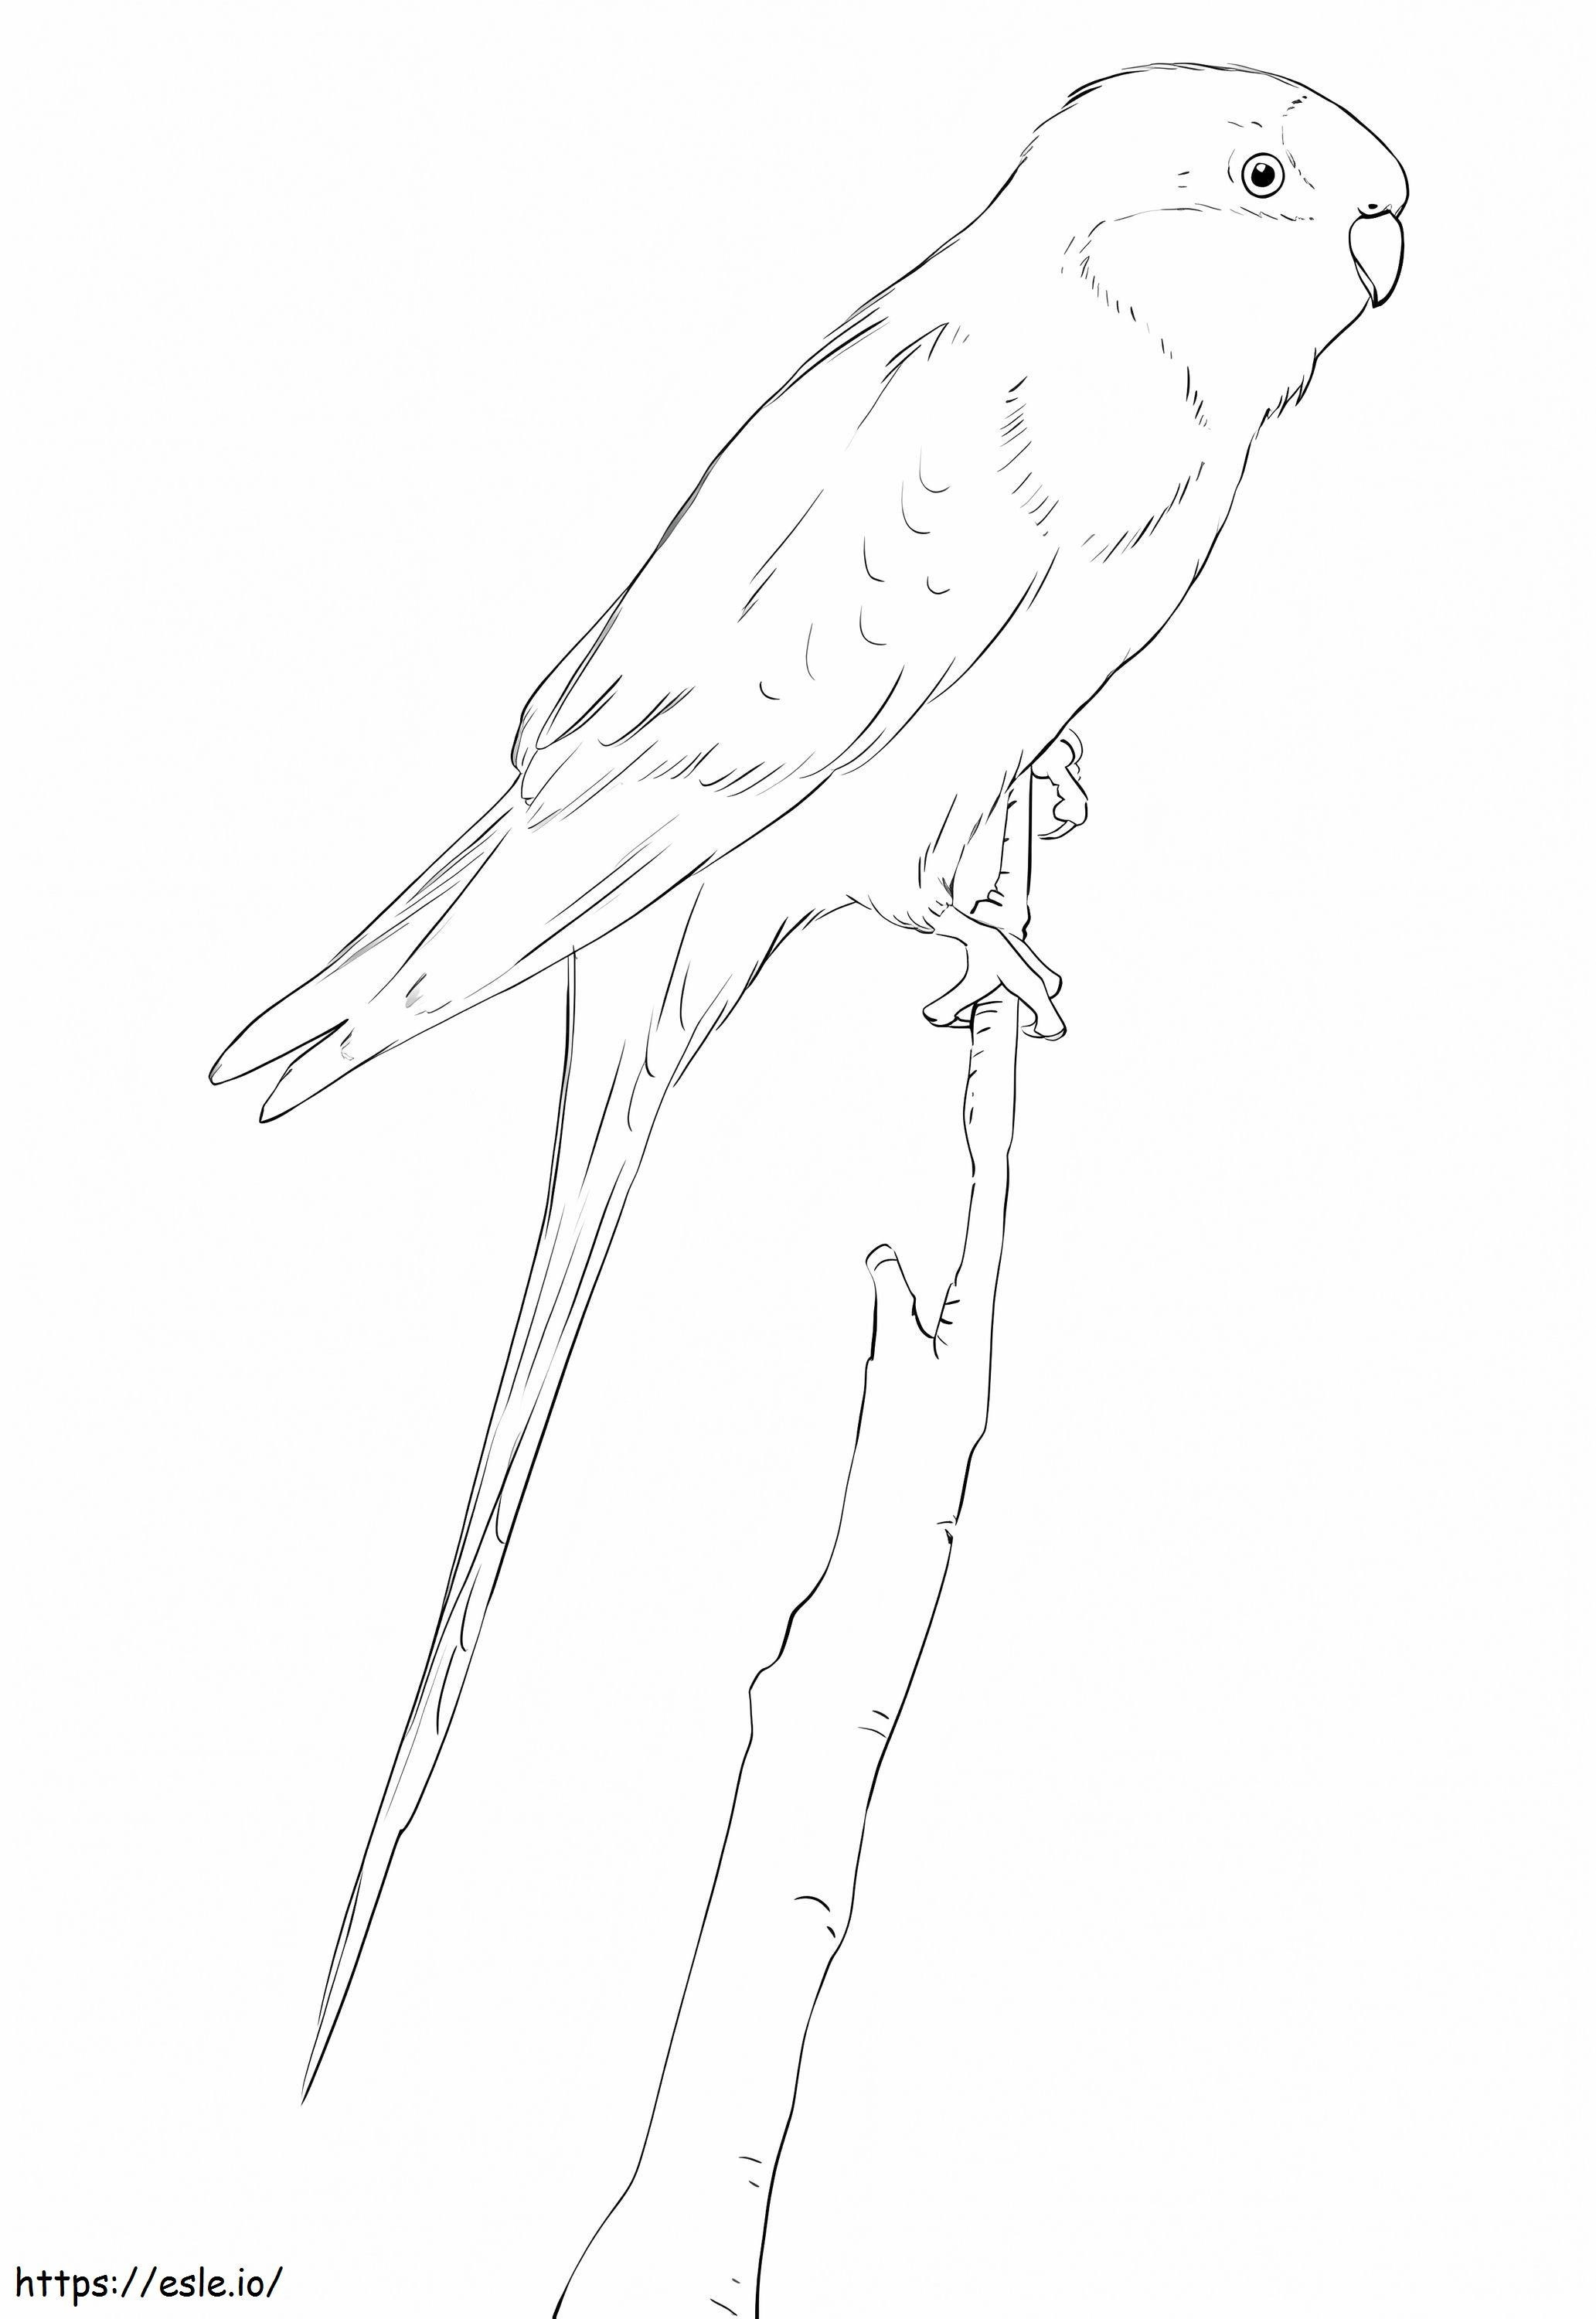 Barraband Parakeet coloring page